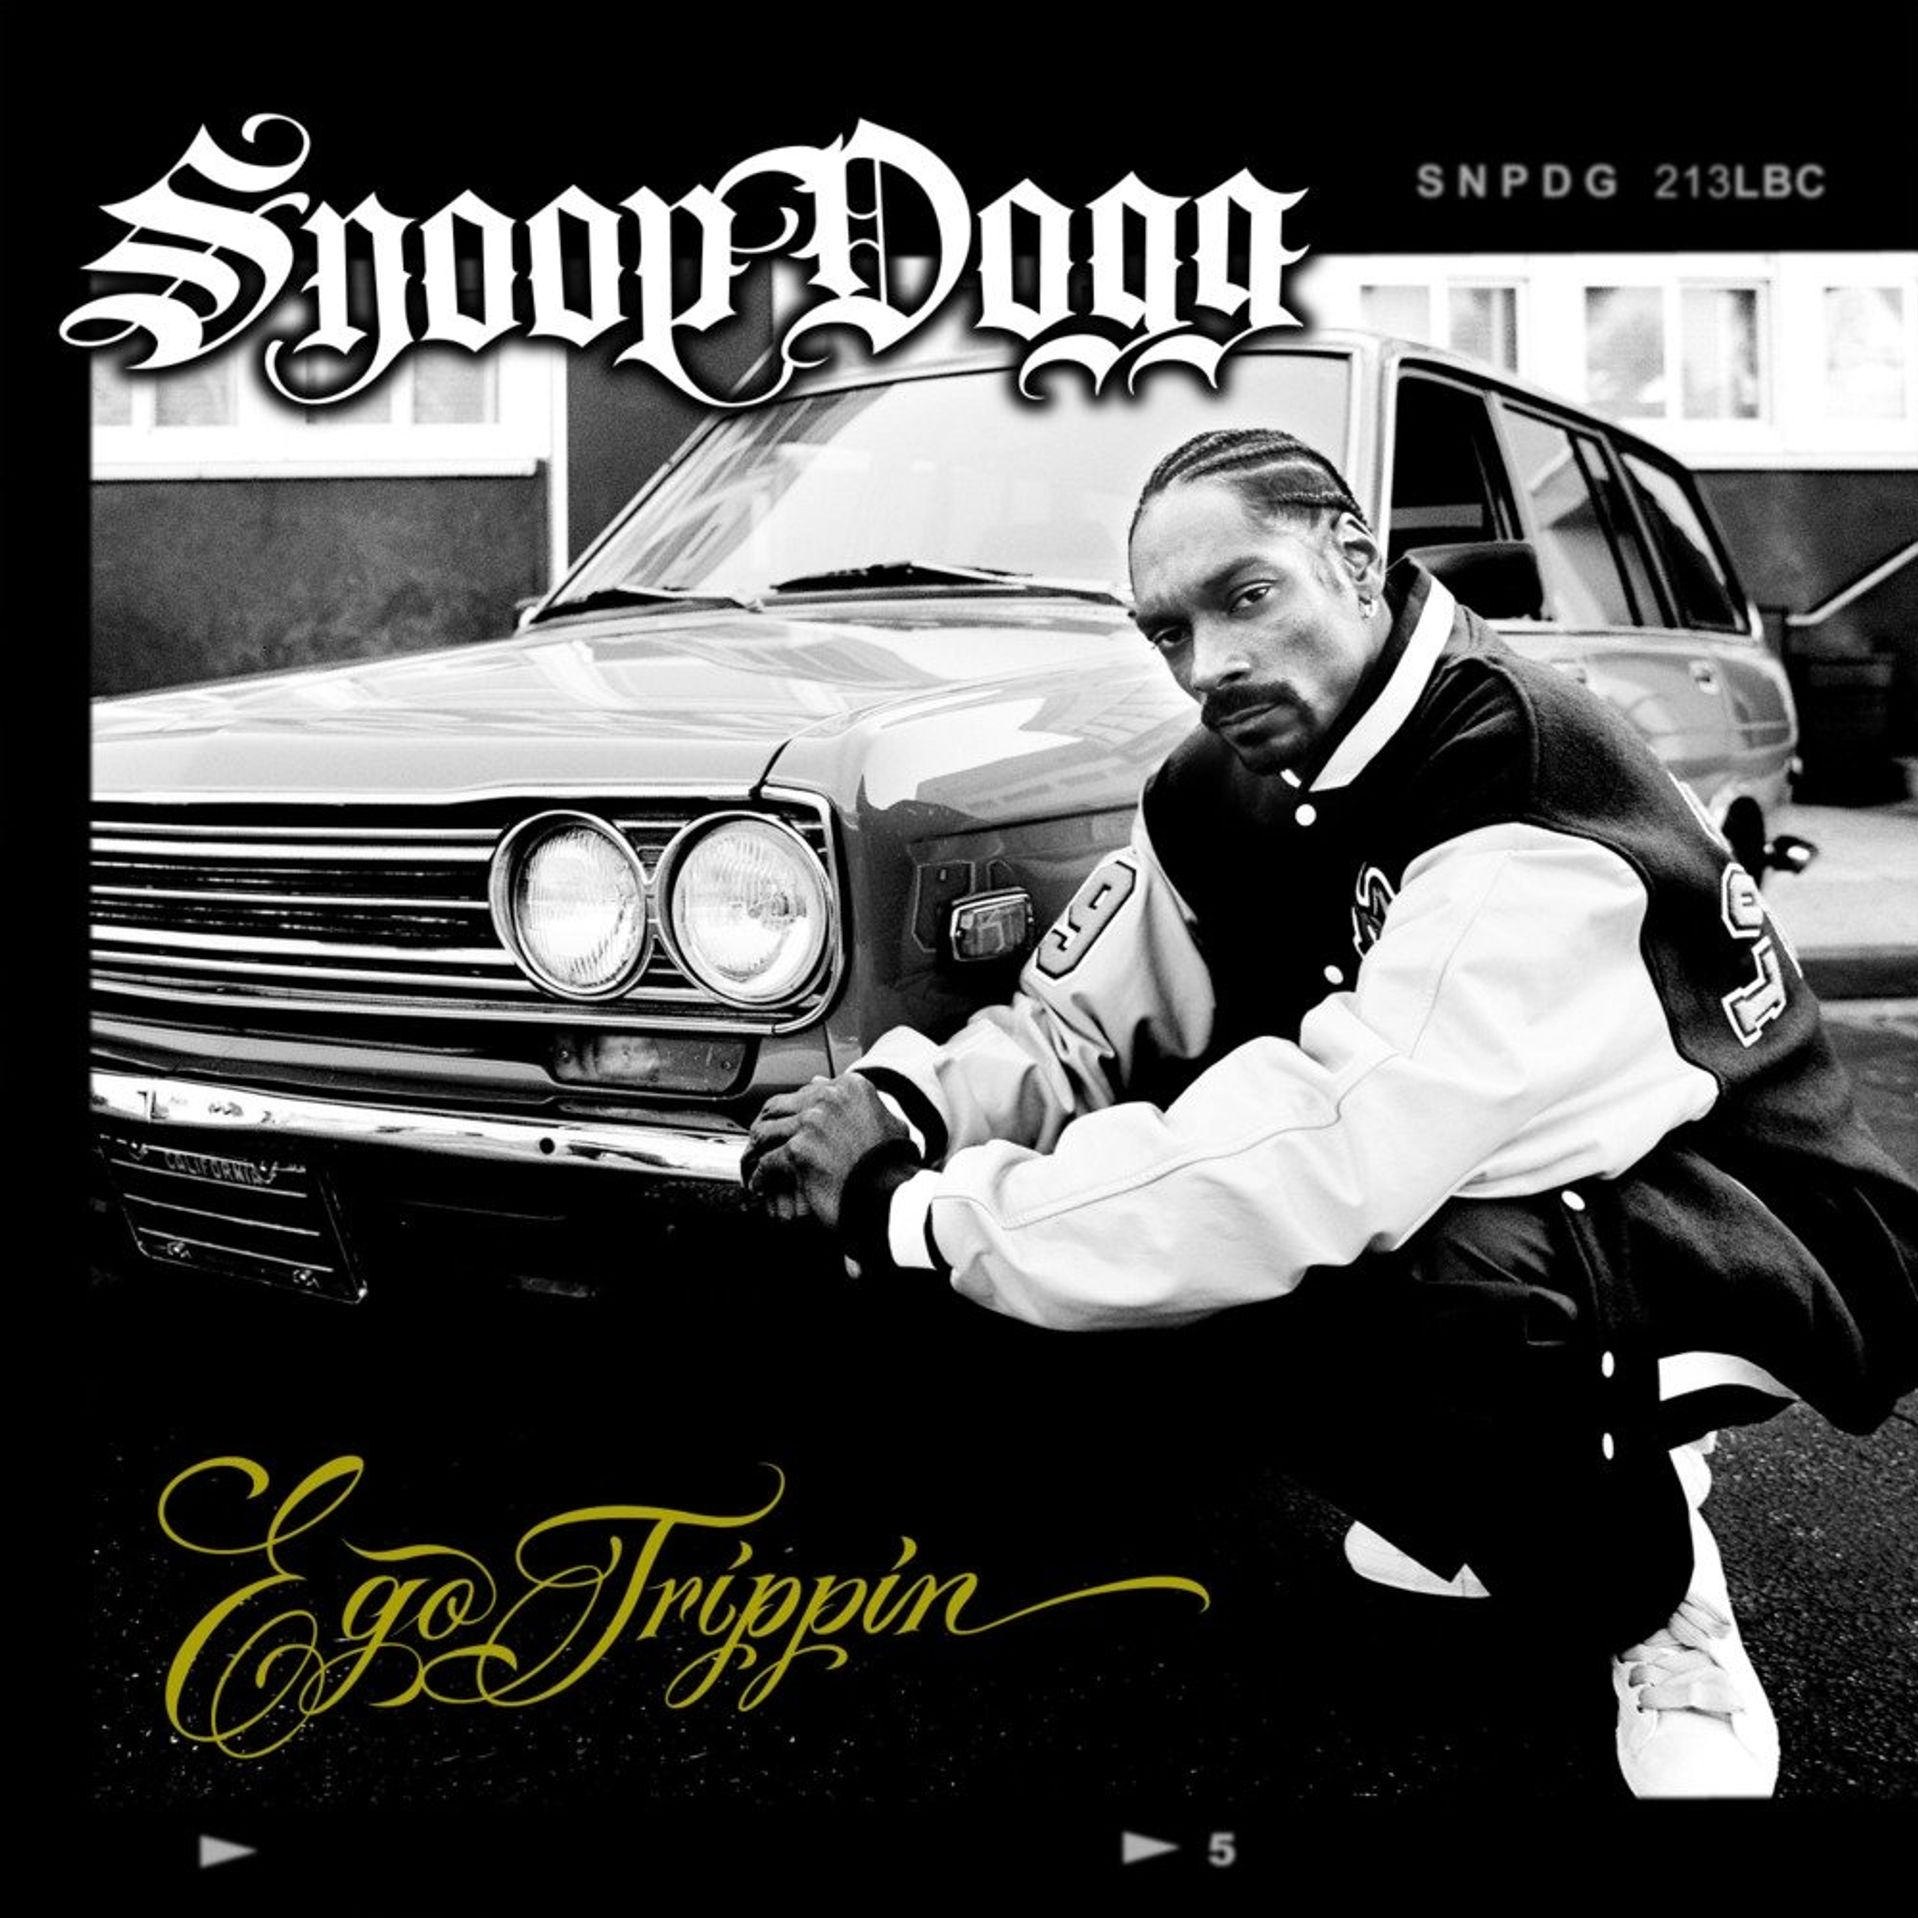 Album Title: Ego Trippin